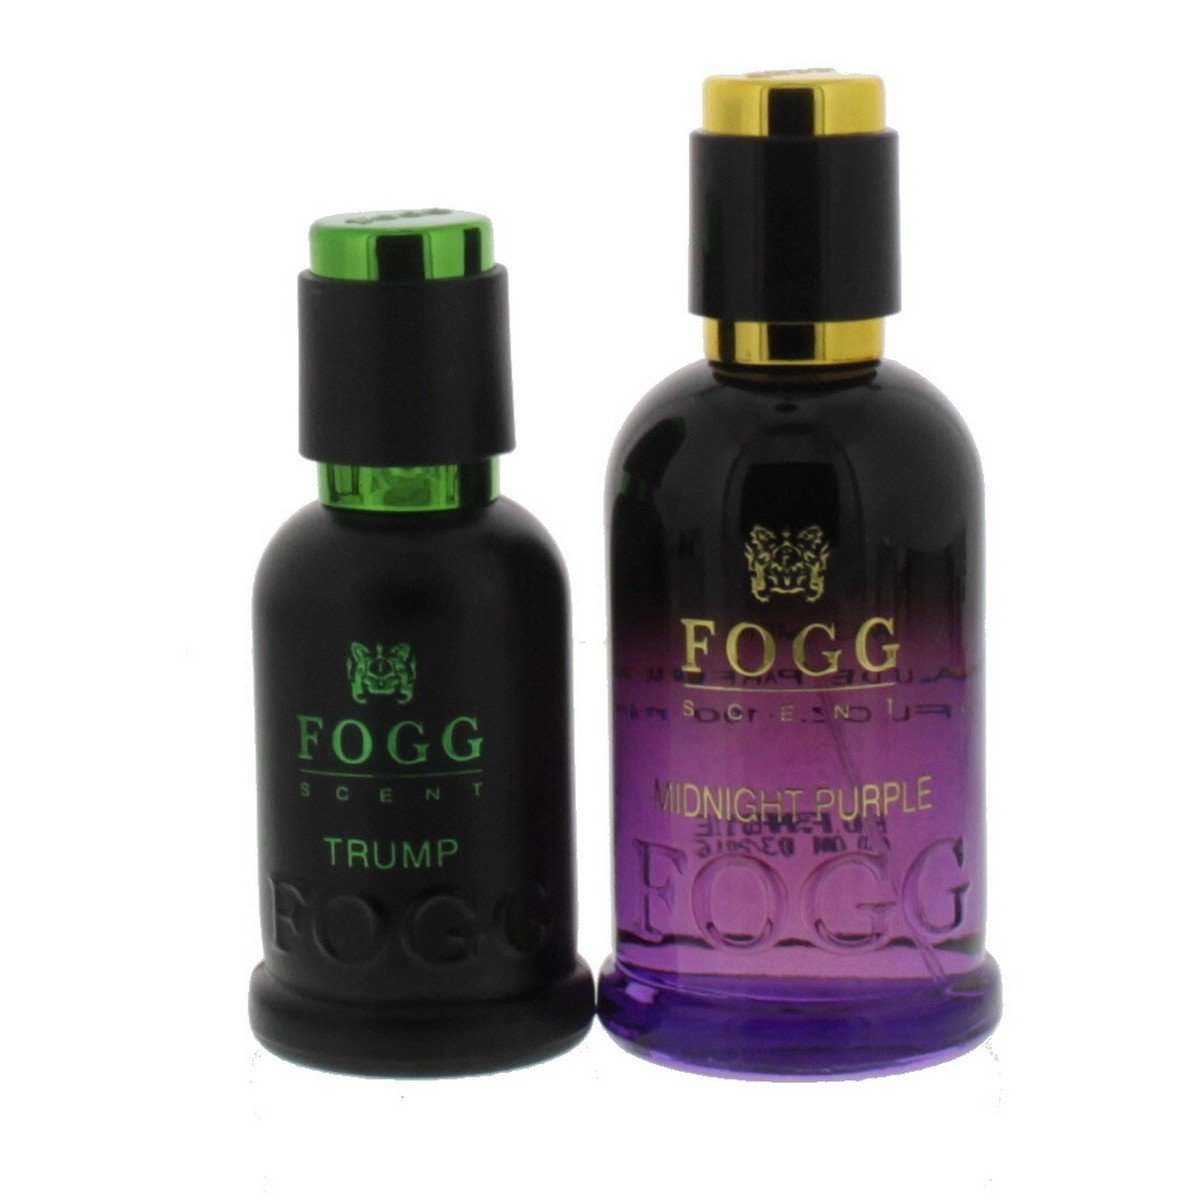 Fogg Eau De Parfum for Women Midnight Purple 100 ml +Trump 50 ml